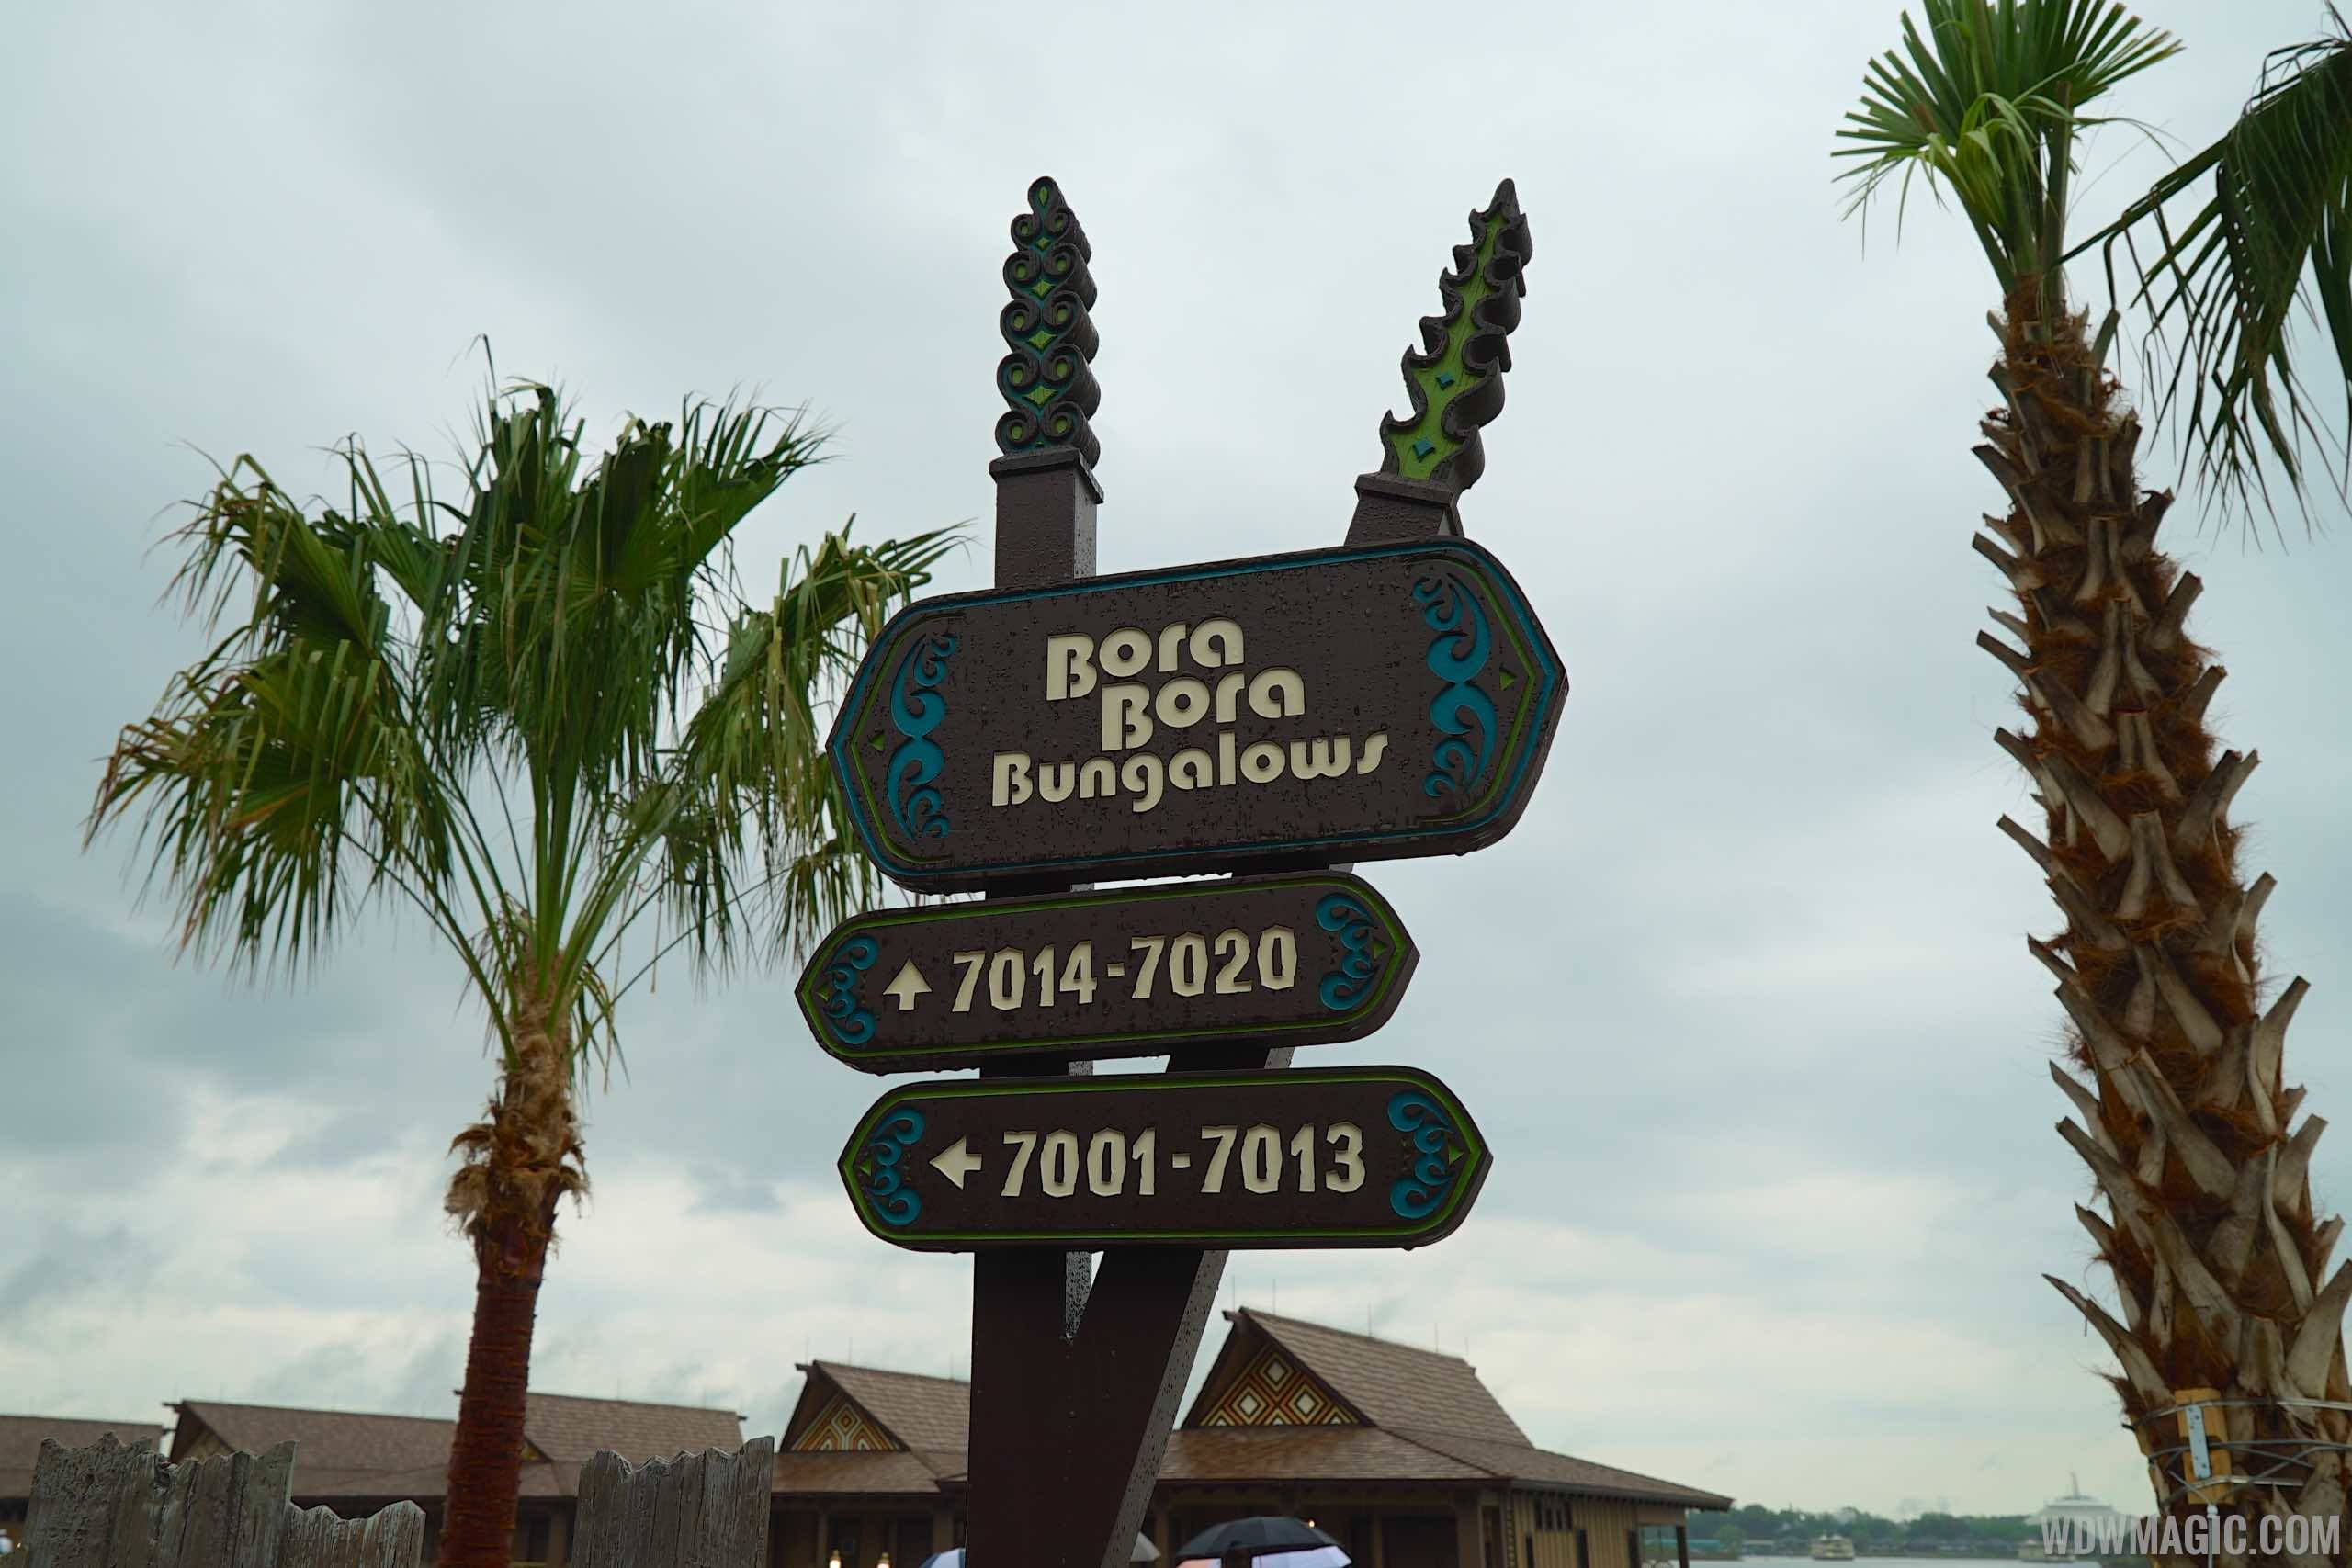 Disney's Polynesian Village Resort Bora Bora Bungalow -New Signage